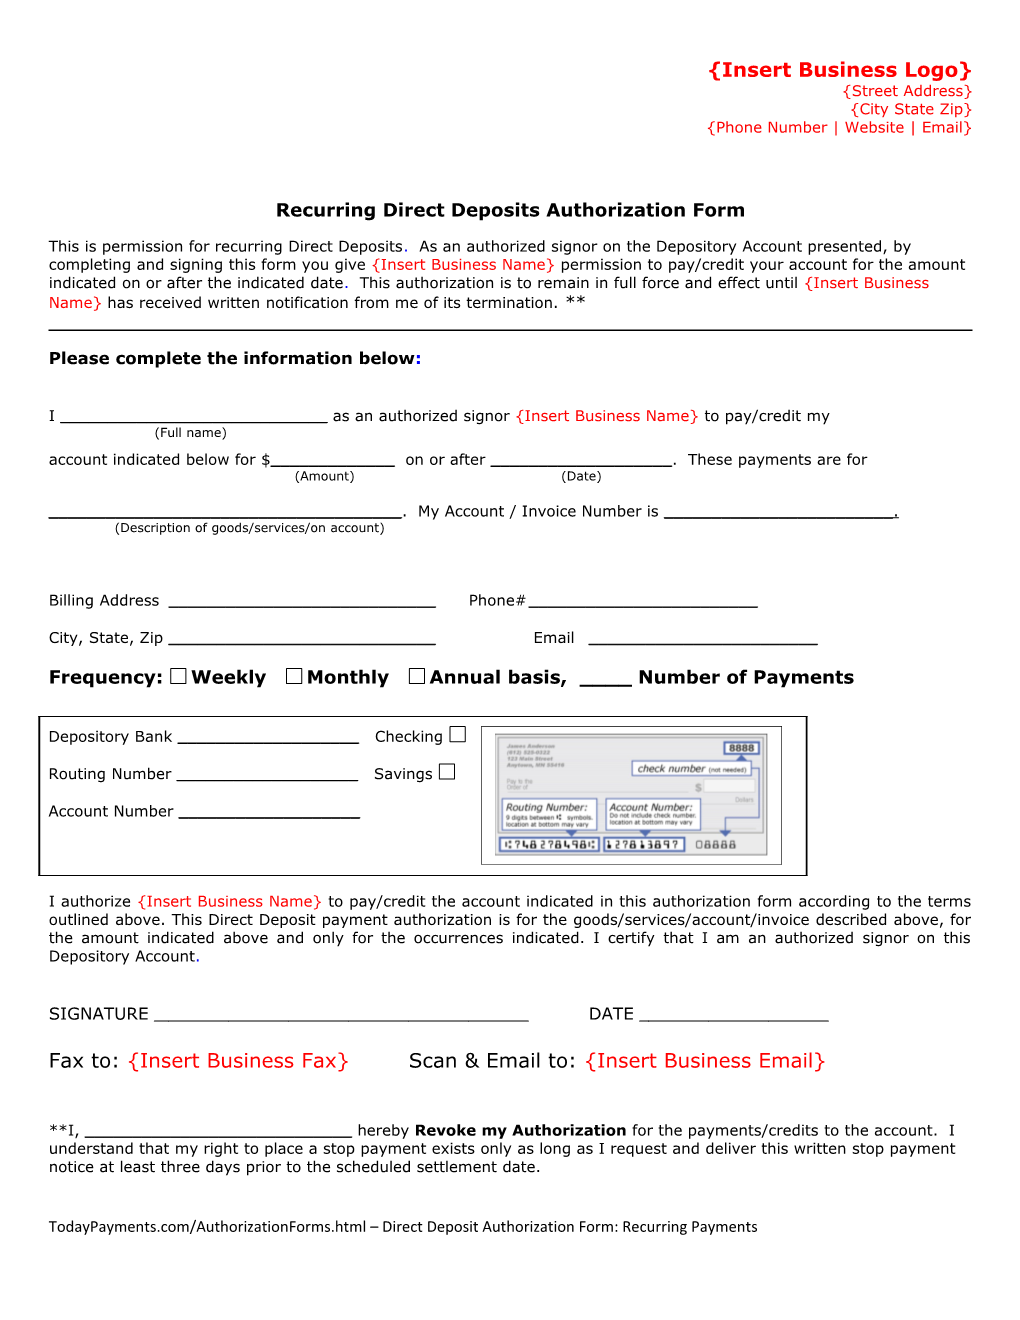 Recurring Direct Deposit Authorization Form